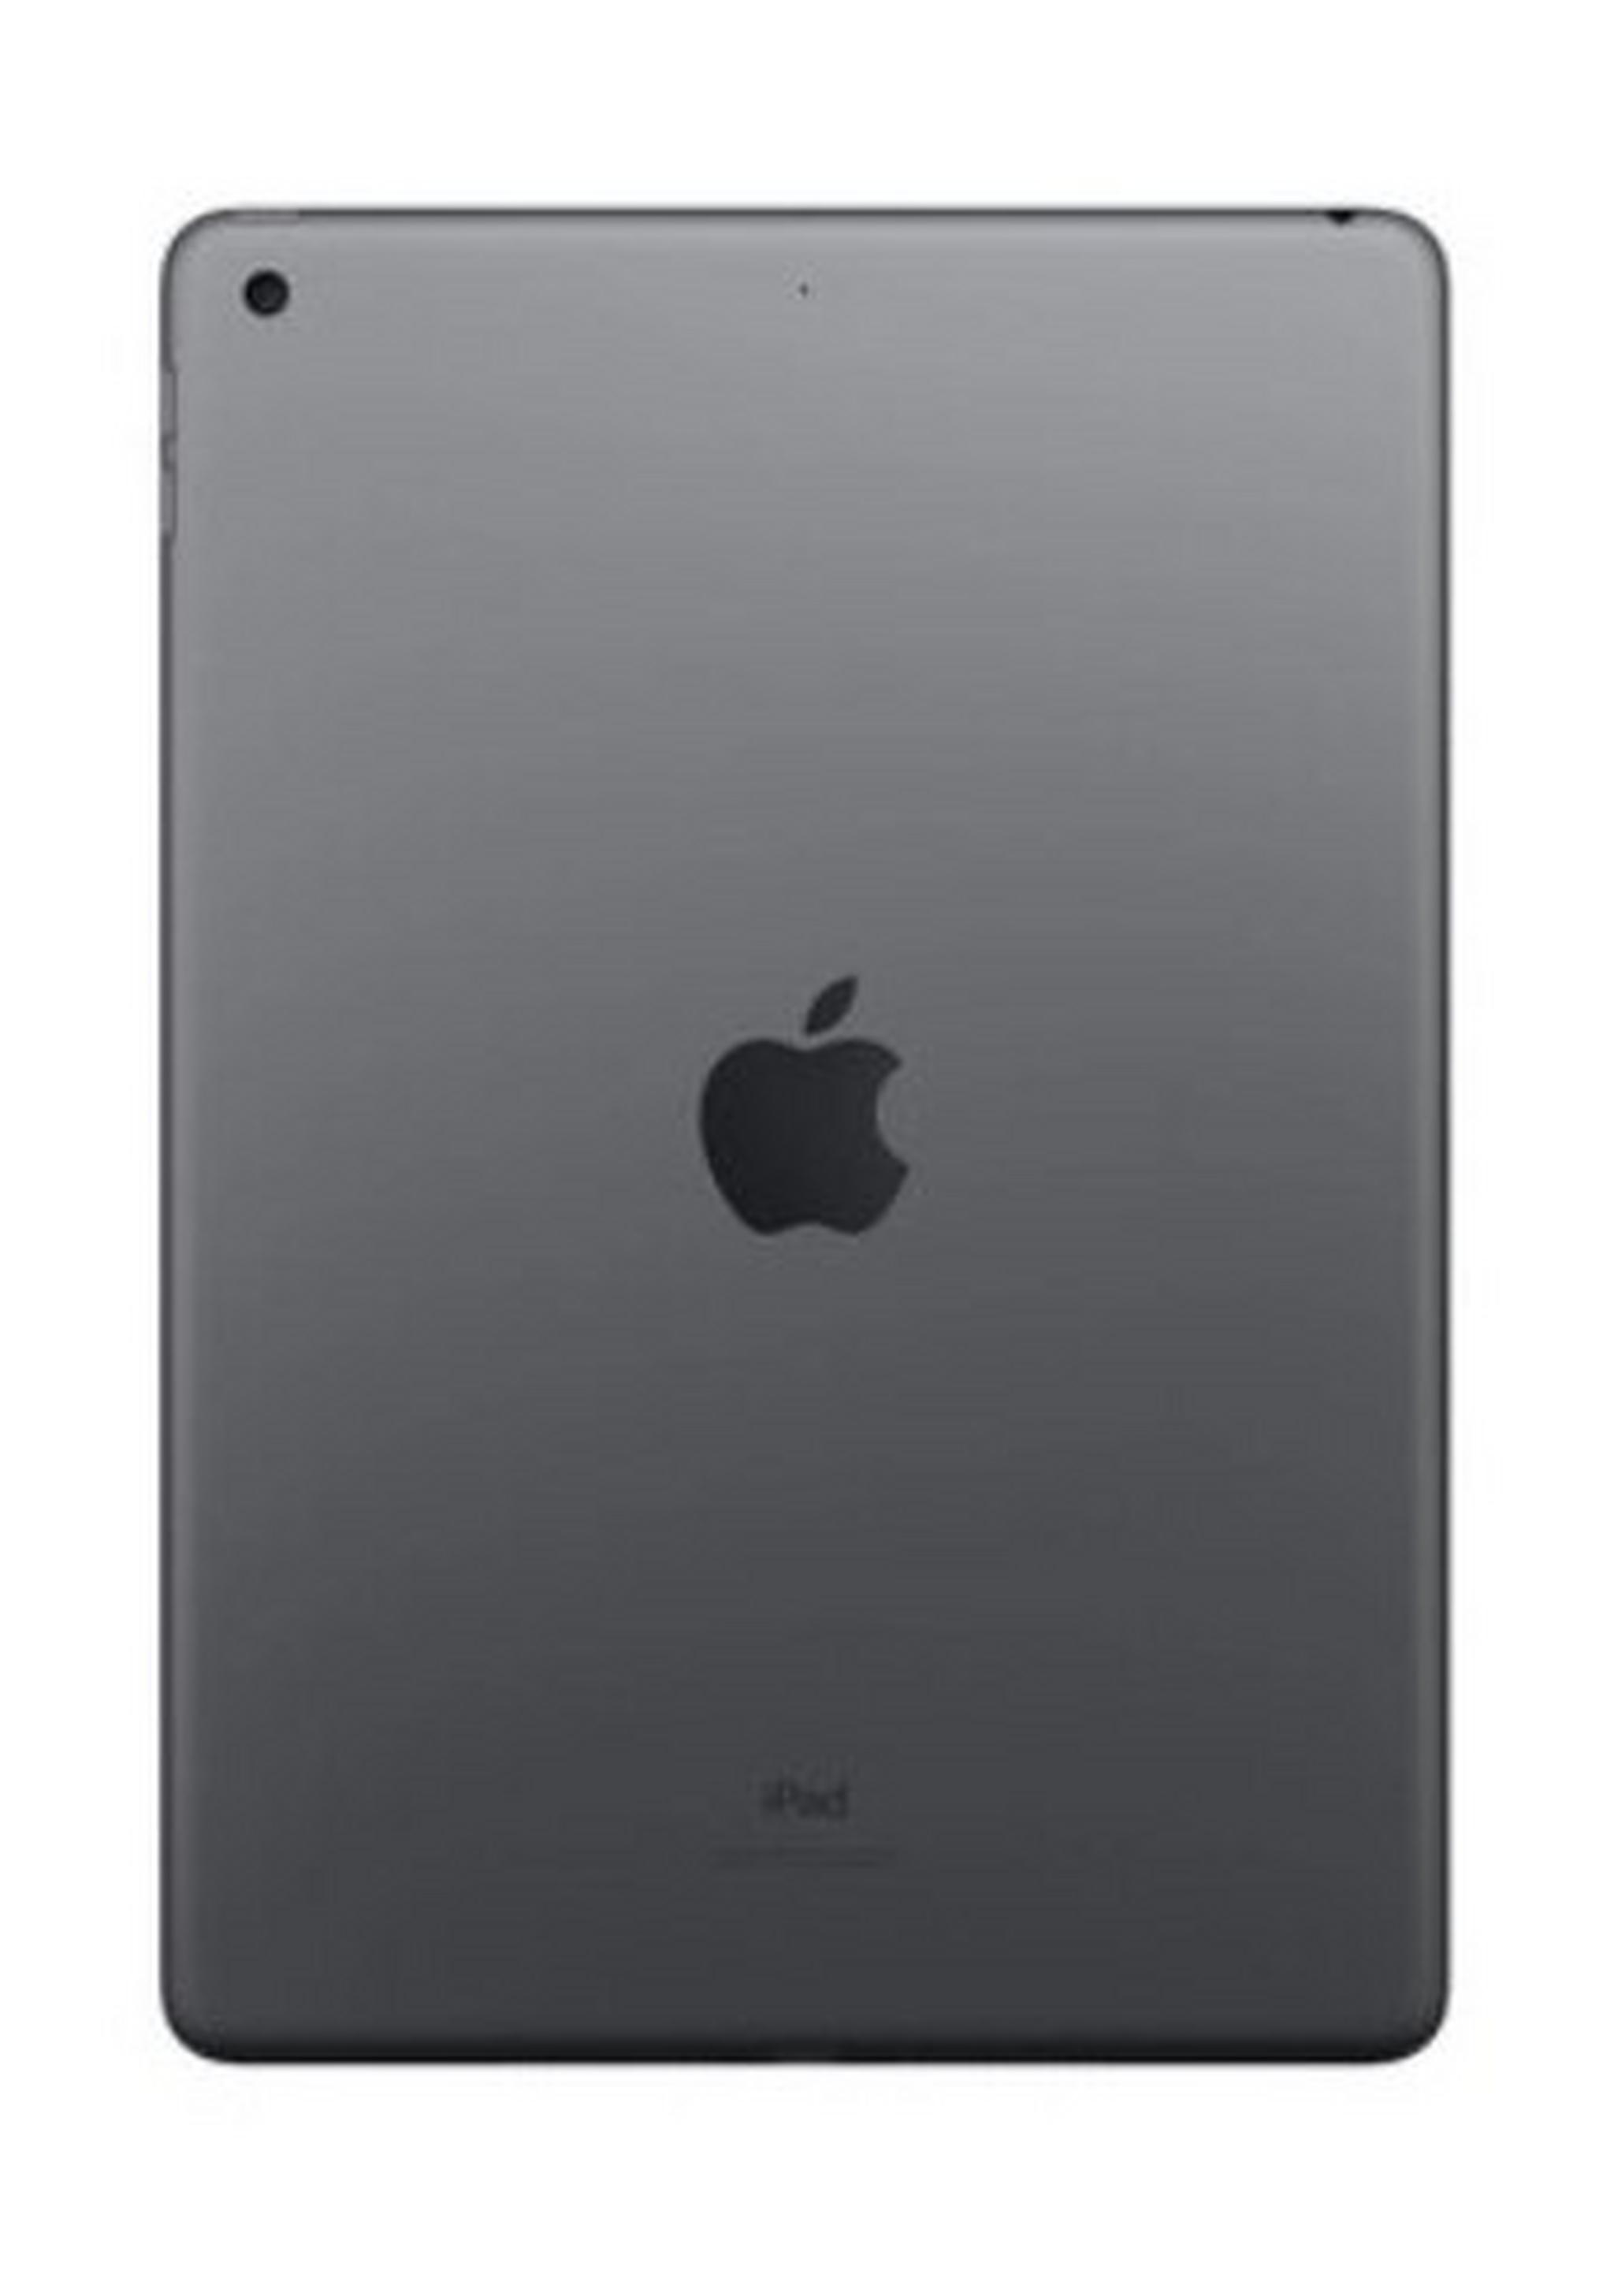 Apple iPad 8 32GB 10.2" Tablet - Space Grey